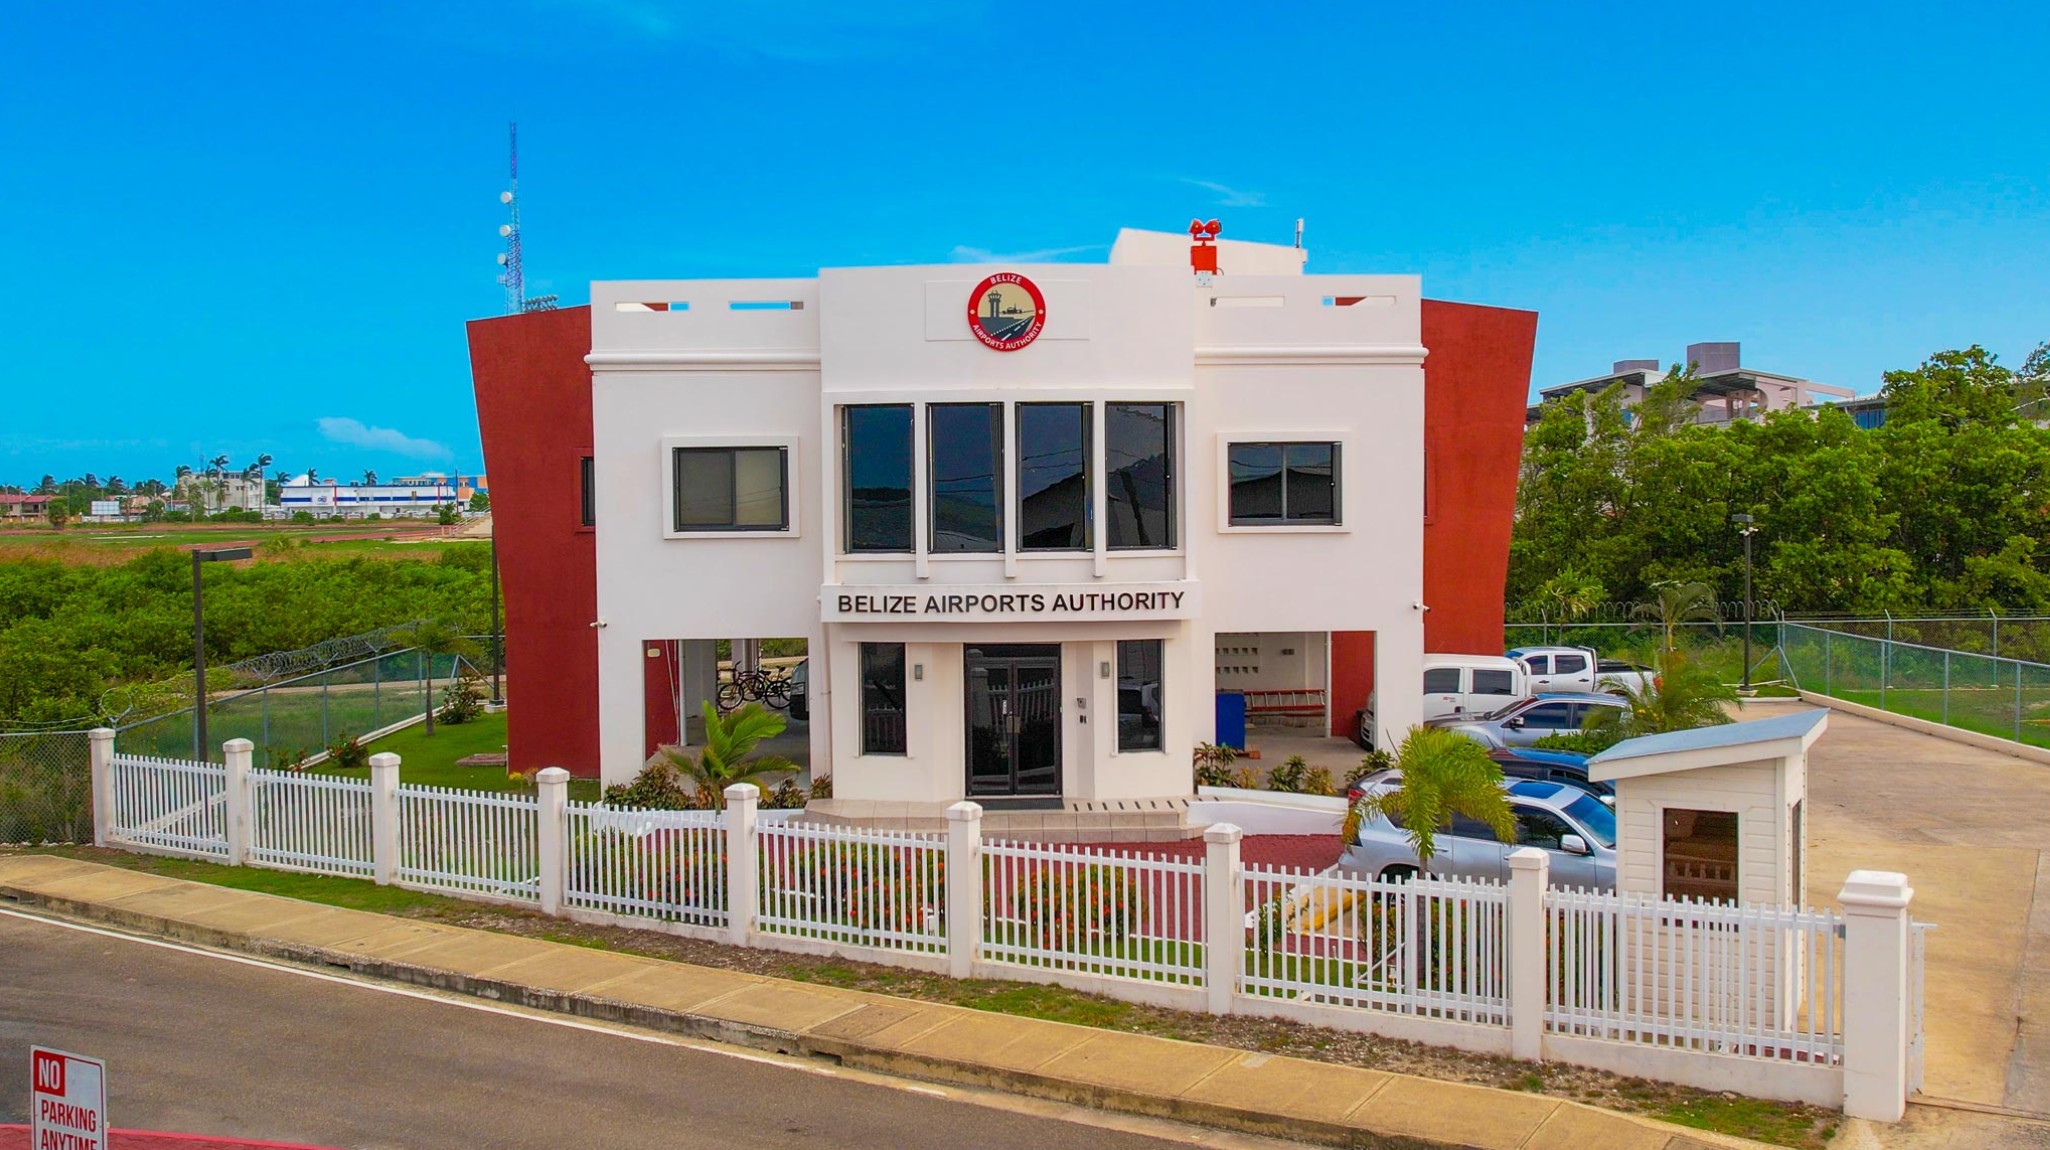 Belize Airport Authority Building